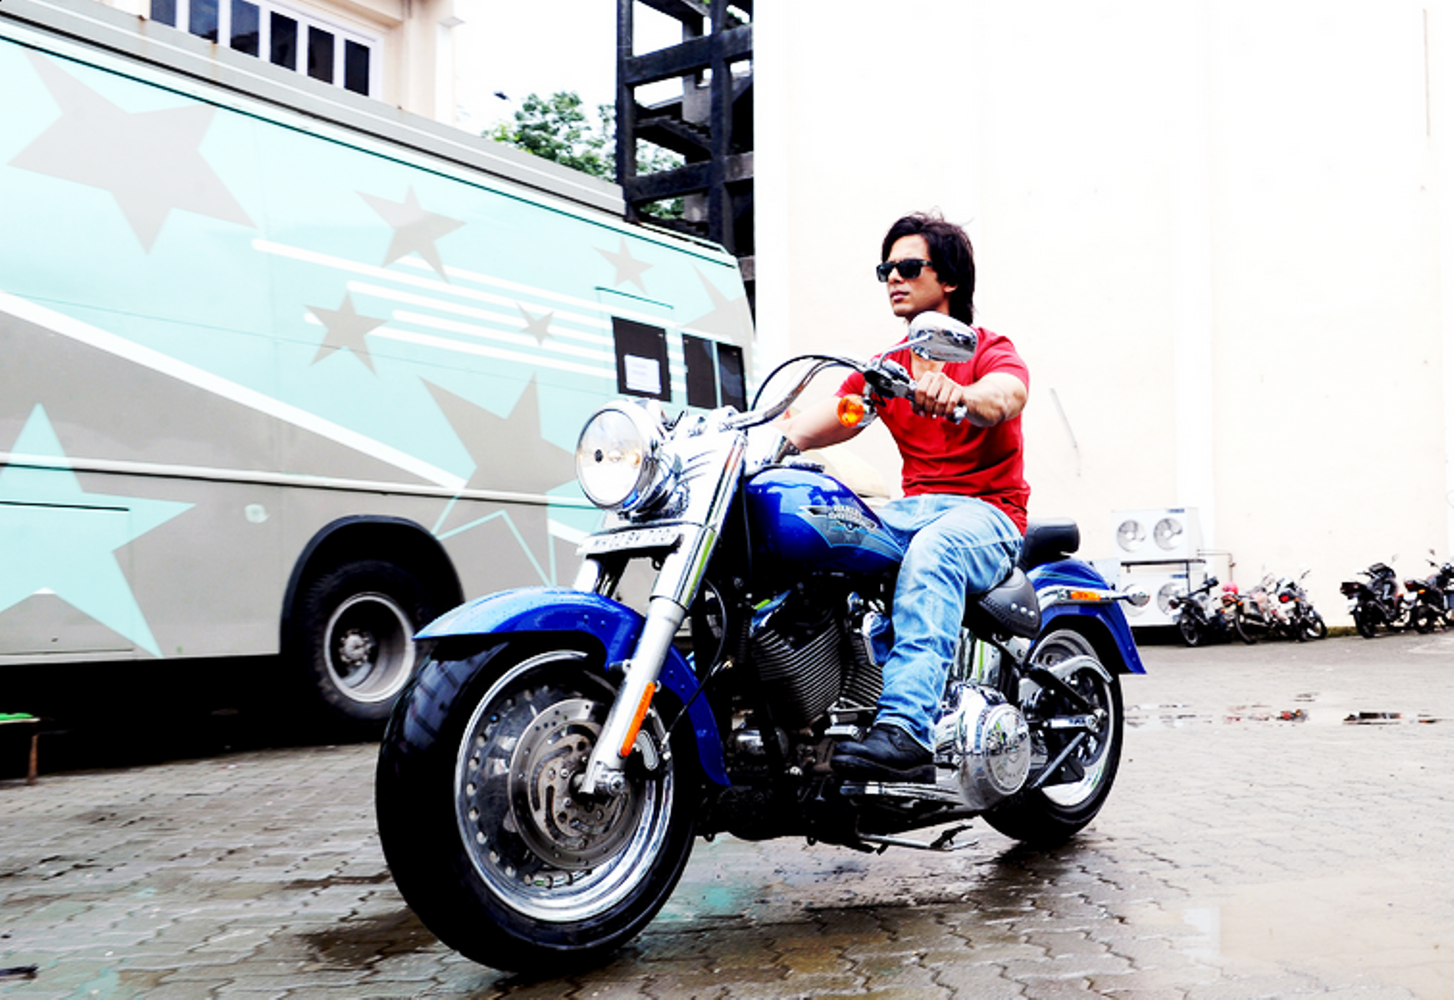 Shahid Kapoor riding his favourite bike